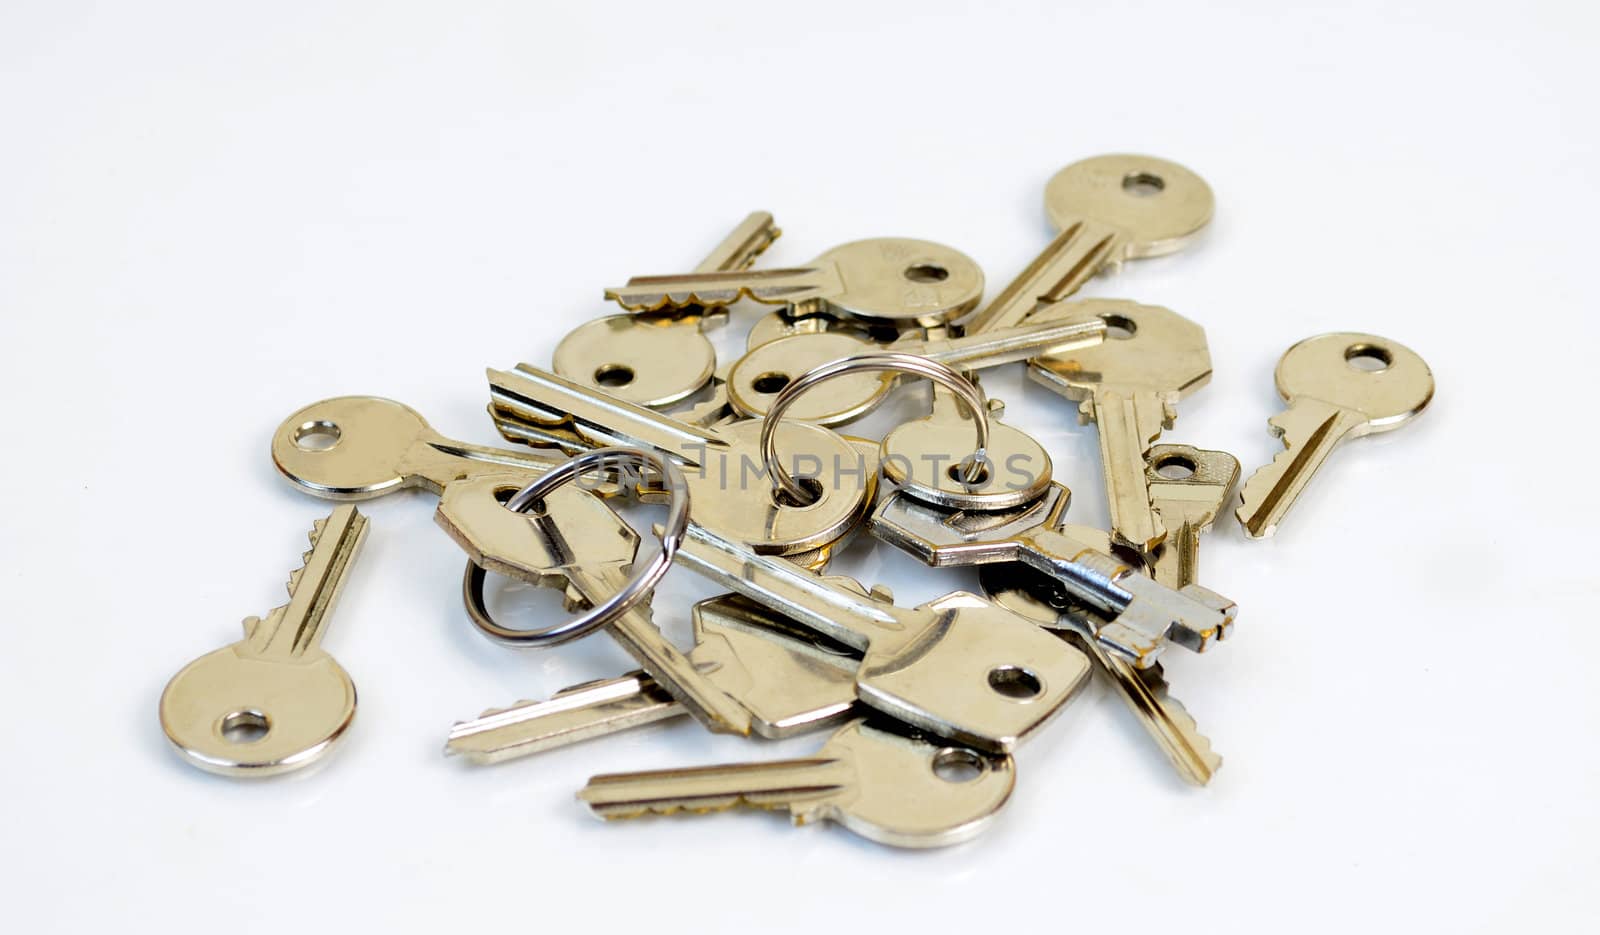 Bunch of keys by artofphoto